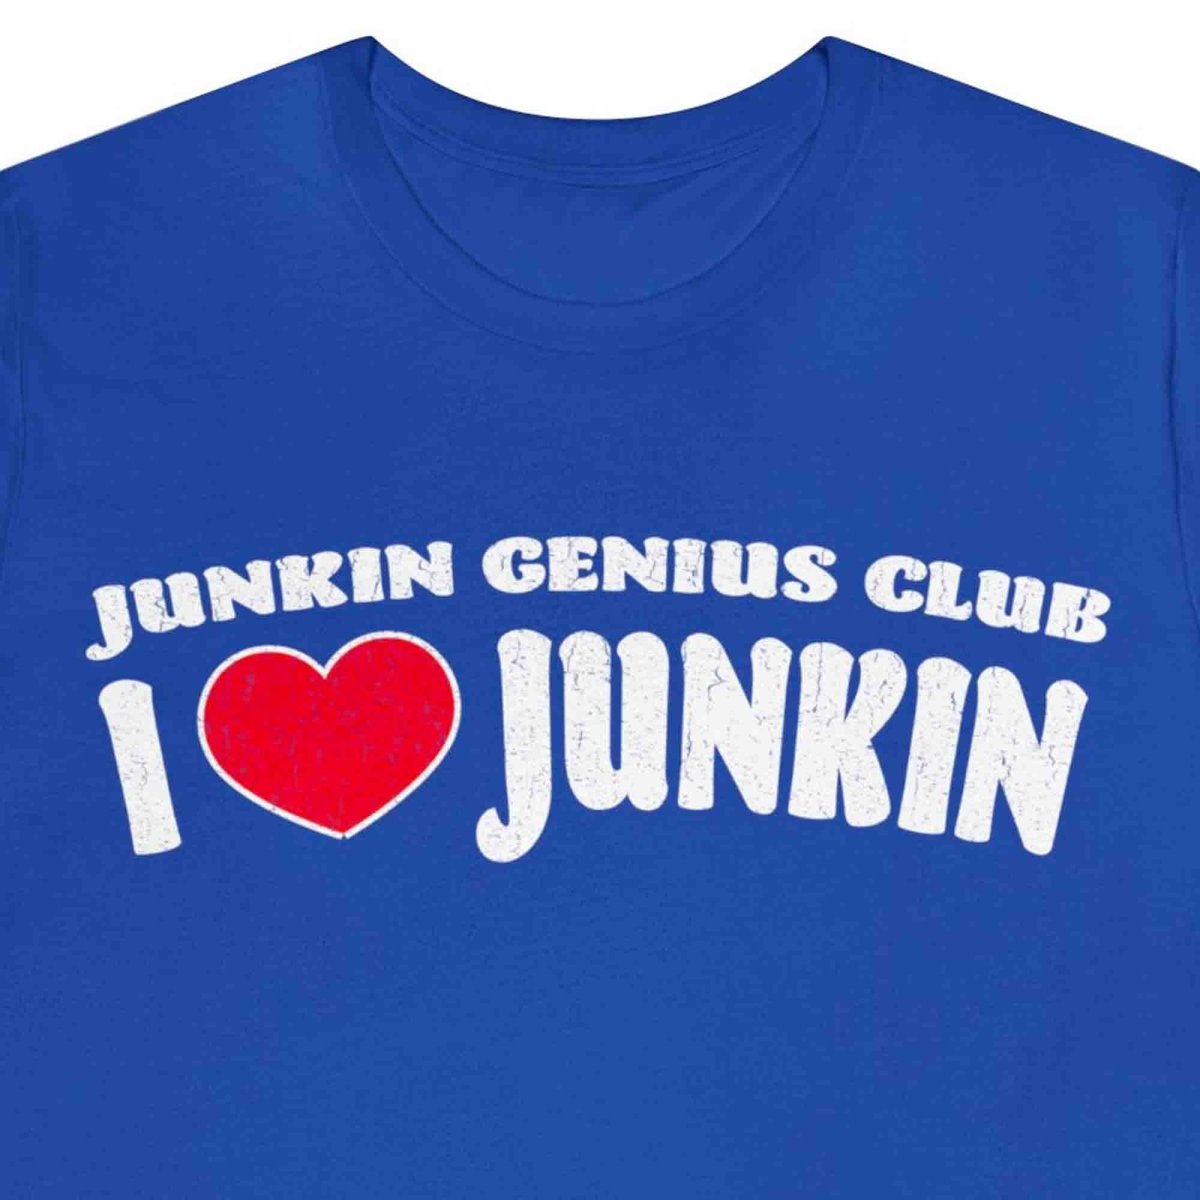 I Love Junkin T-Shirt, Garage Sales, Flea Markets, Antiques, Junkin' Genius Club